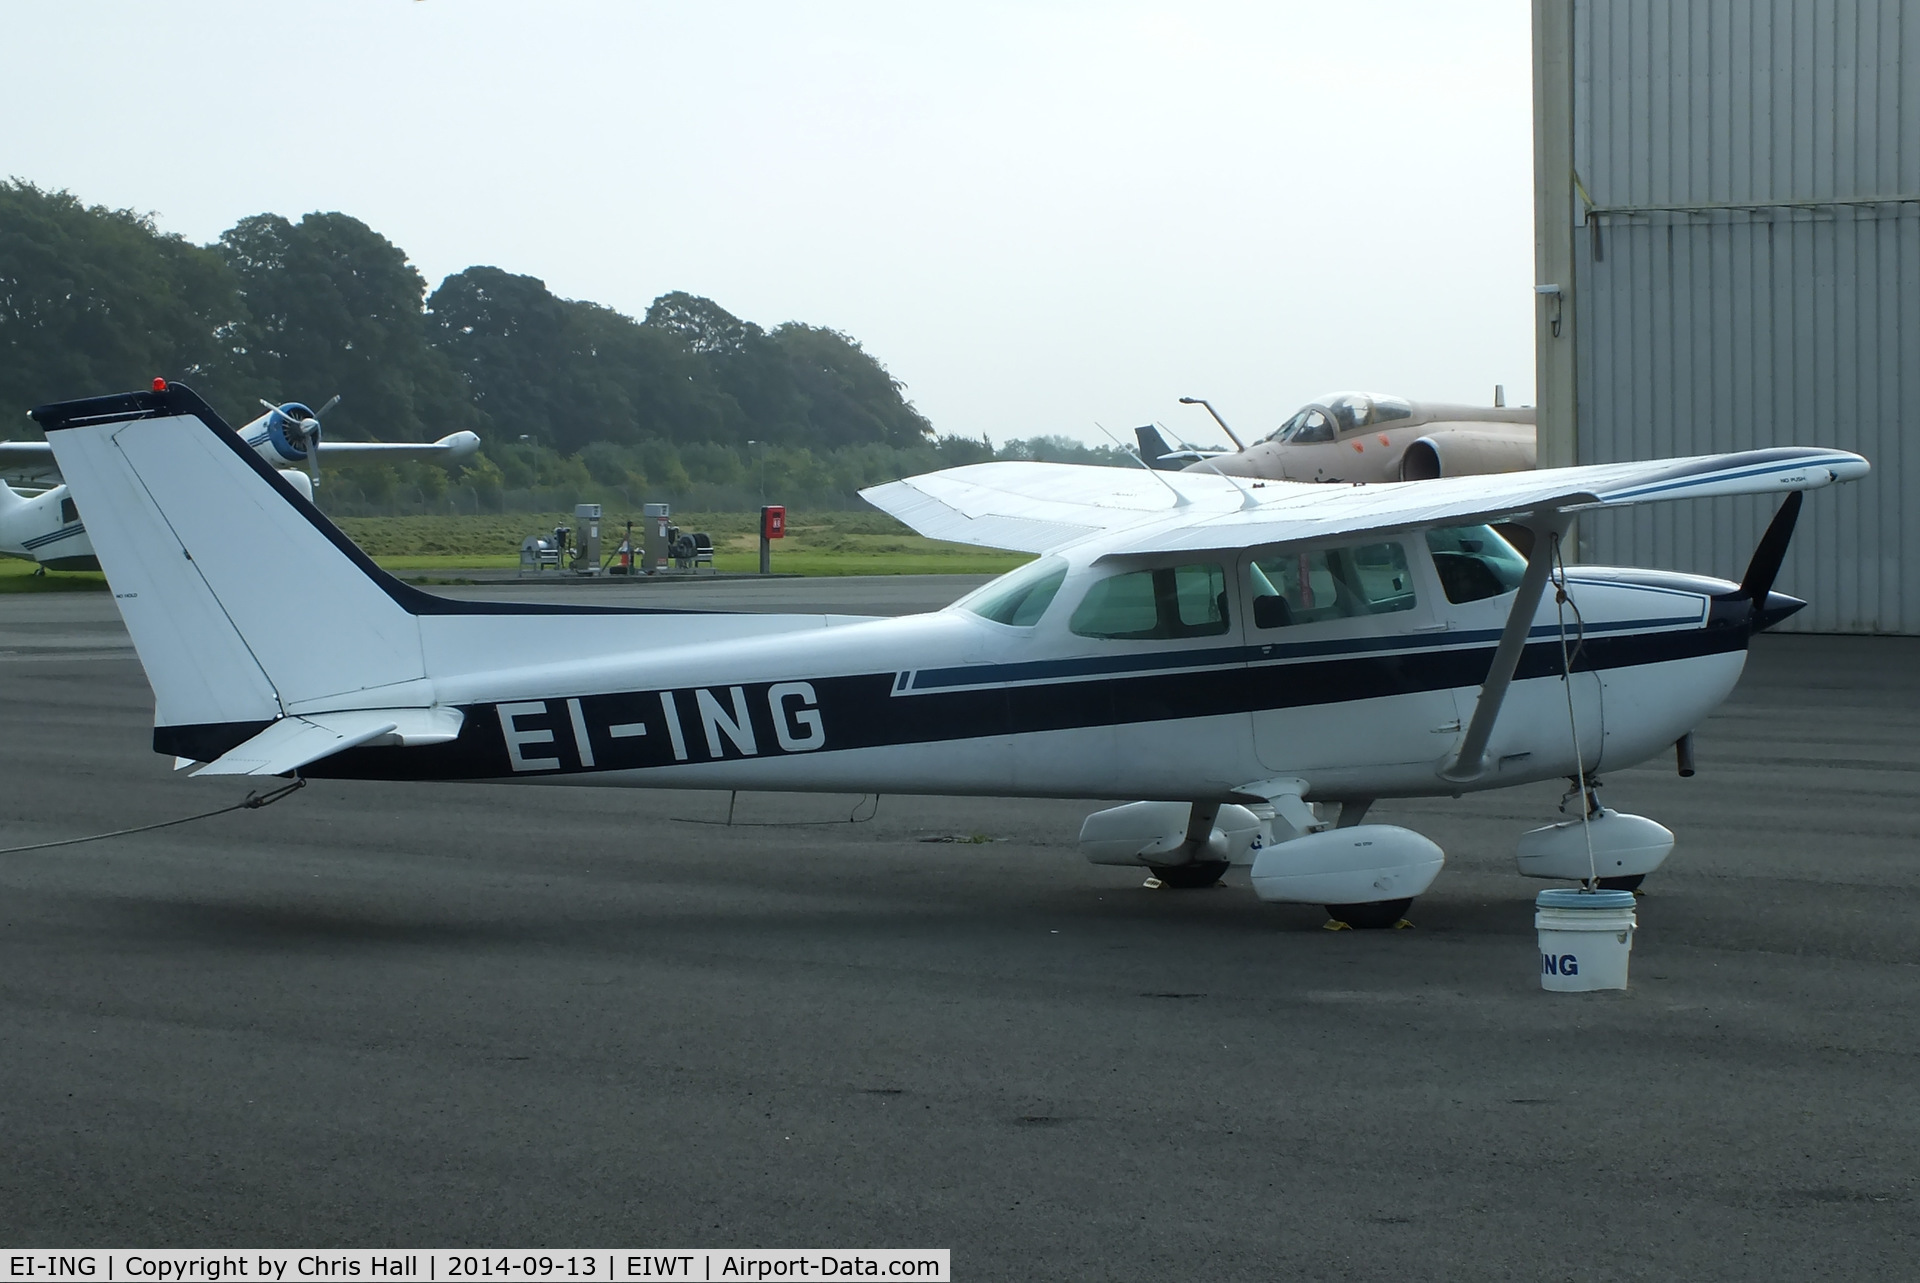 EI-ING, 1981 Reims F172P Skyhawk C/N F172-02084, at Weston Airport, Ireland